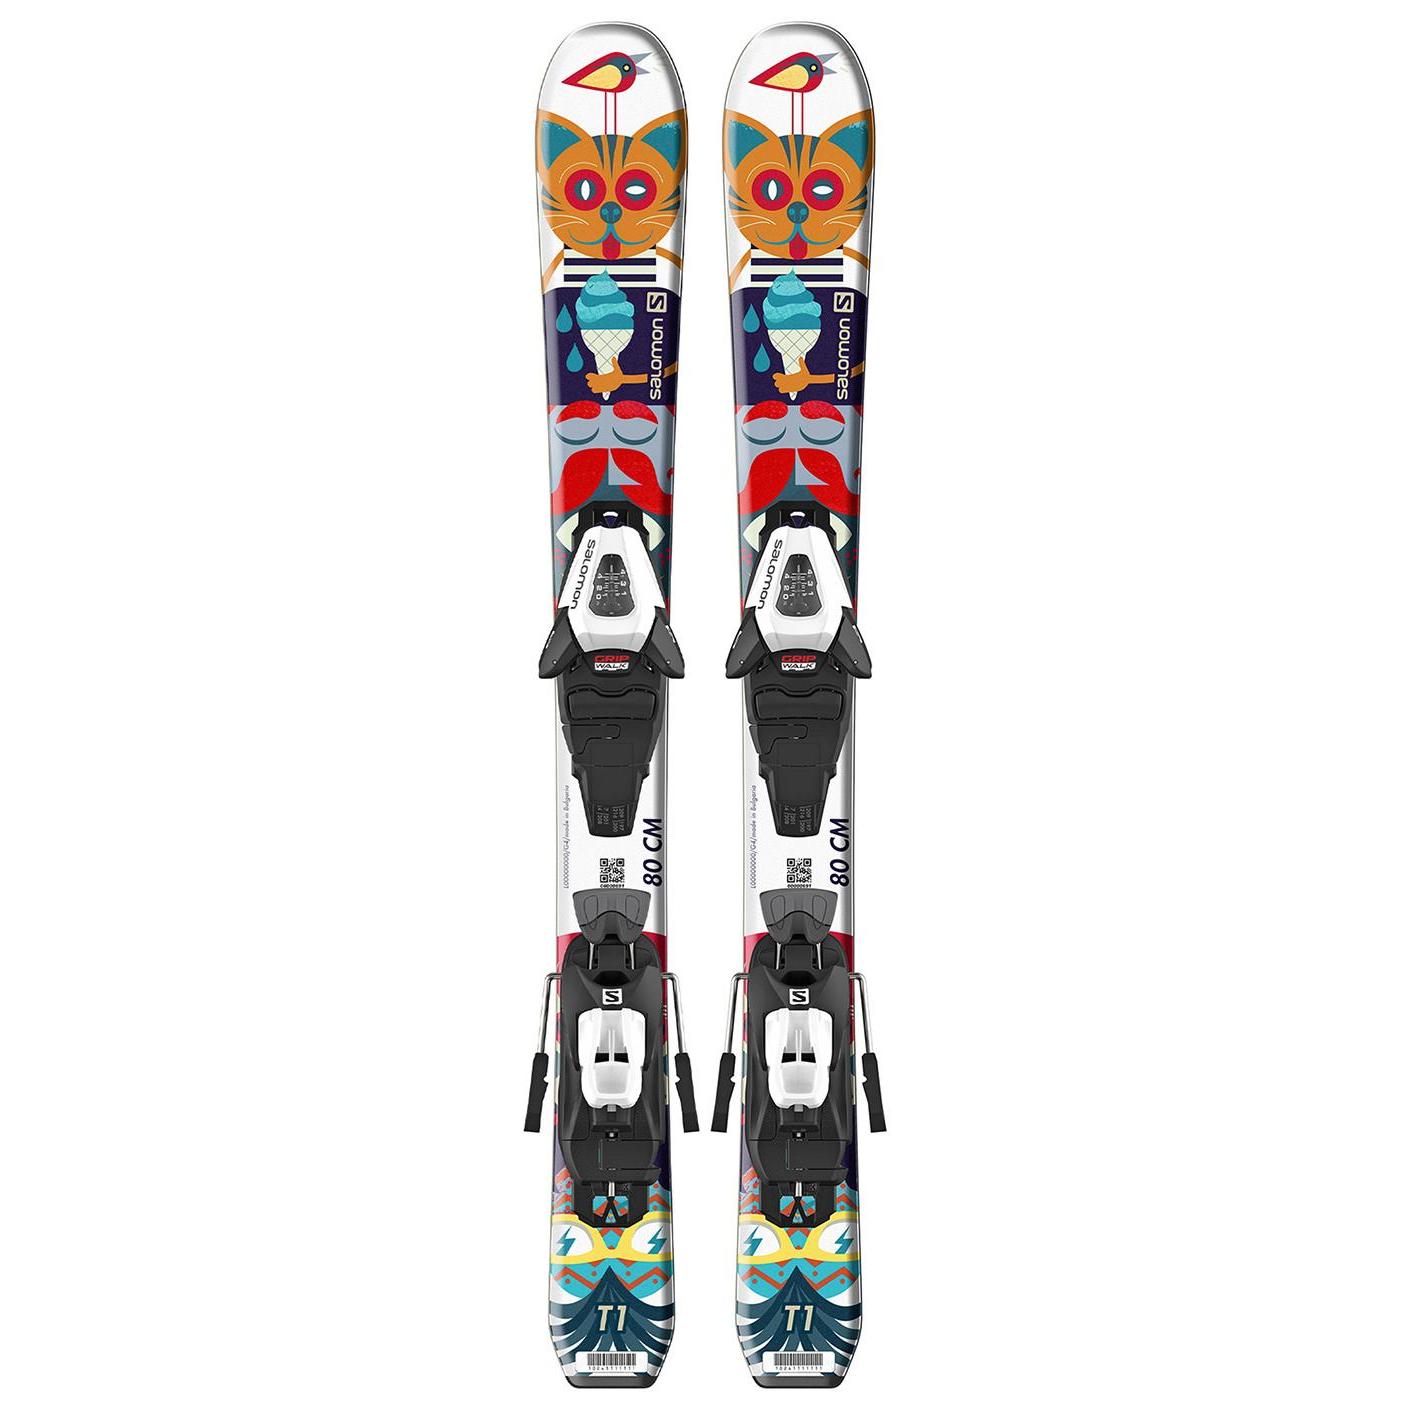 Горные лыжи с креплениями SALOMON 2019-20 T1 Jr XS + C5 White/Multicolor